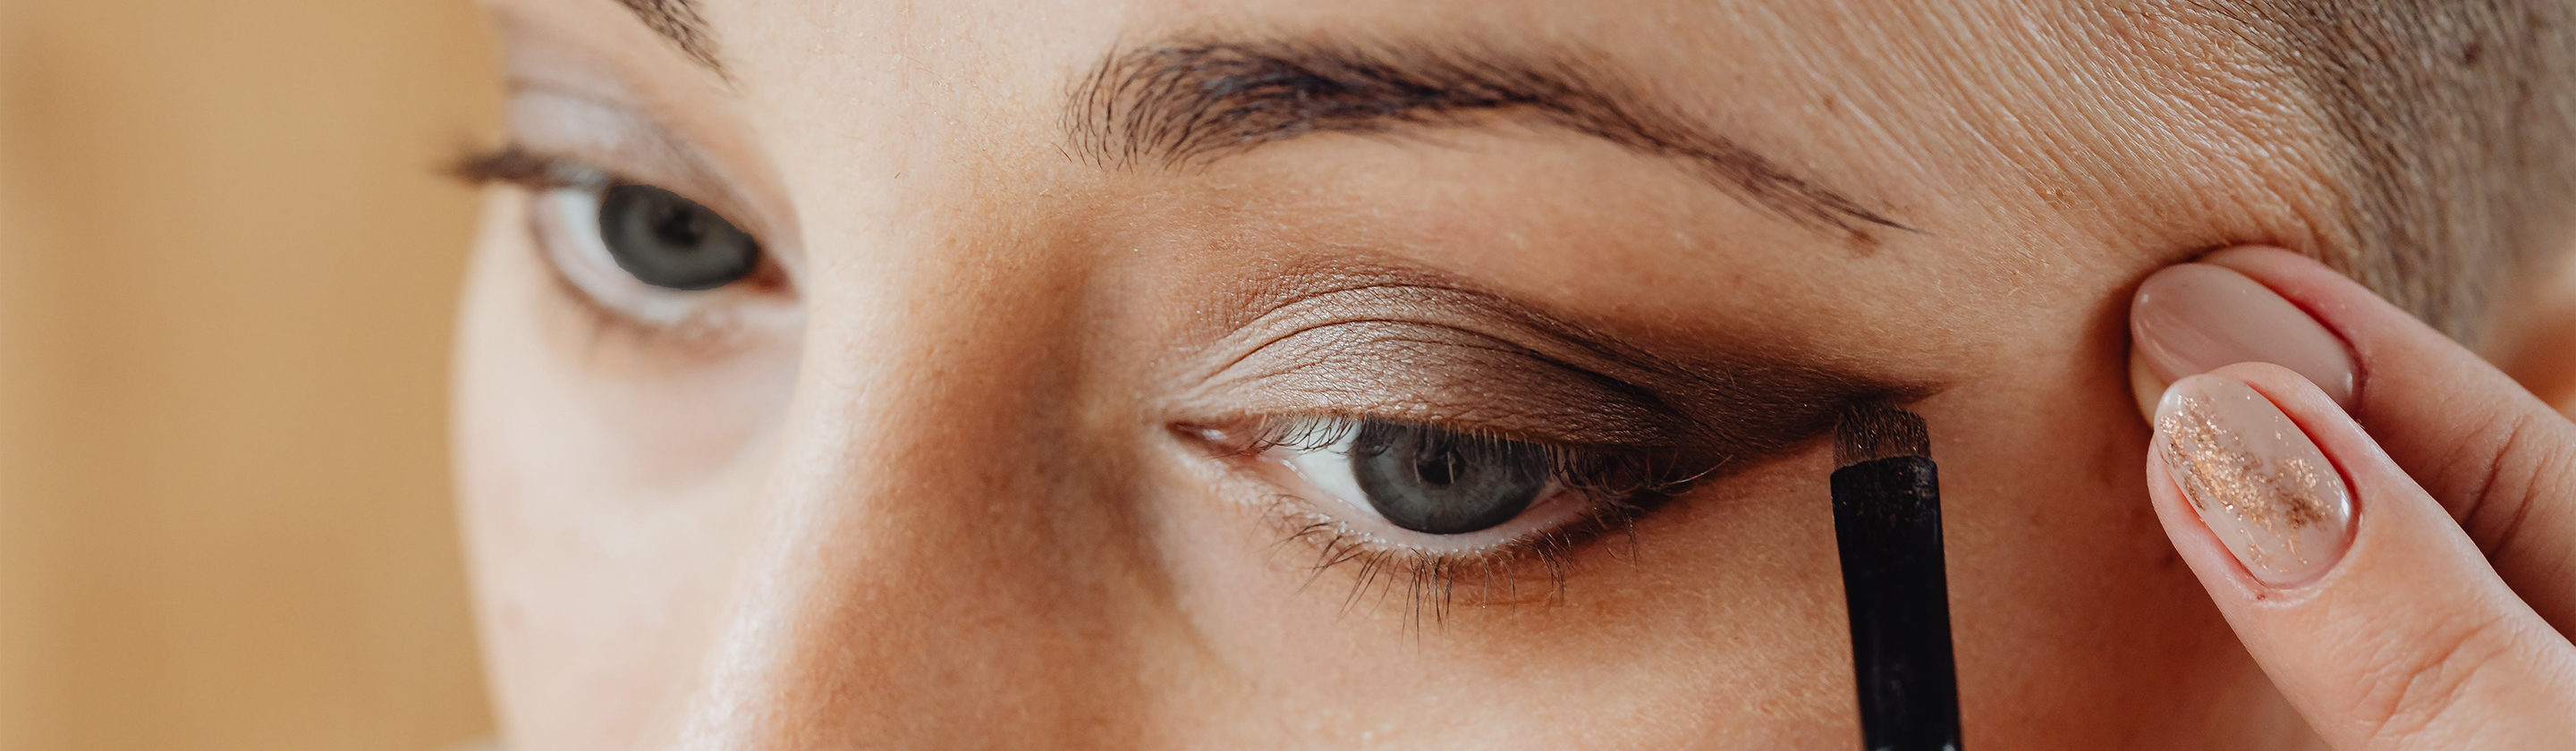 How to Create an Incredible Smokey Eye Look on Close Set Eyes